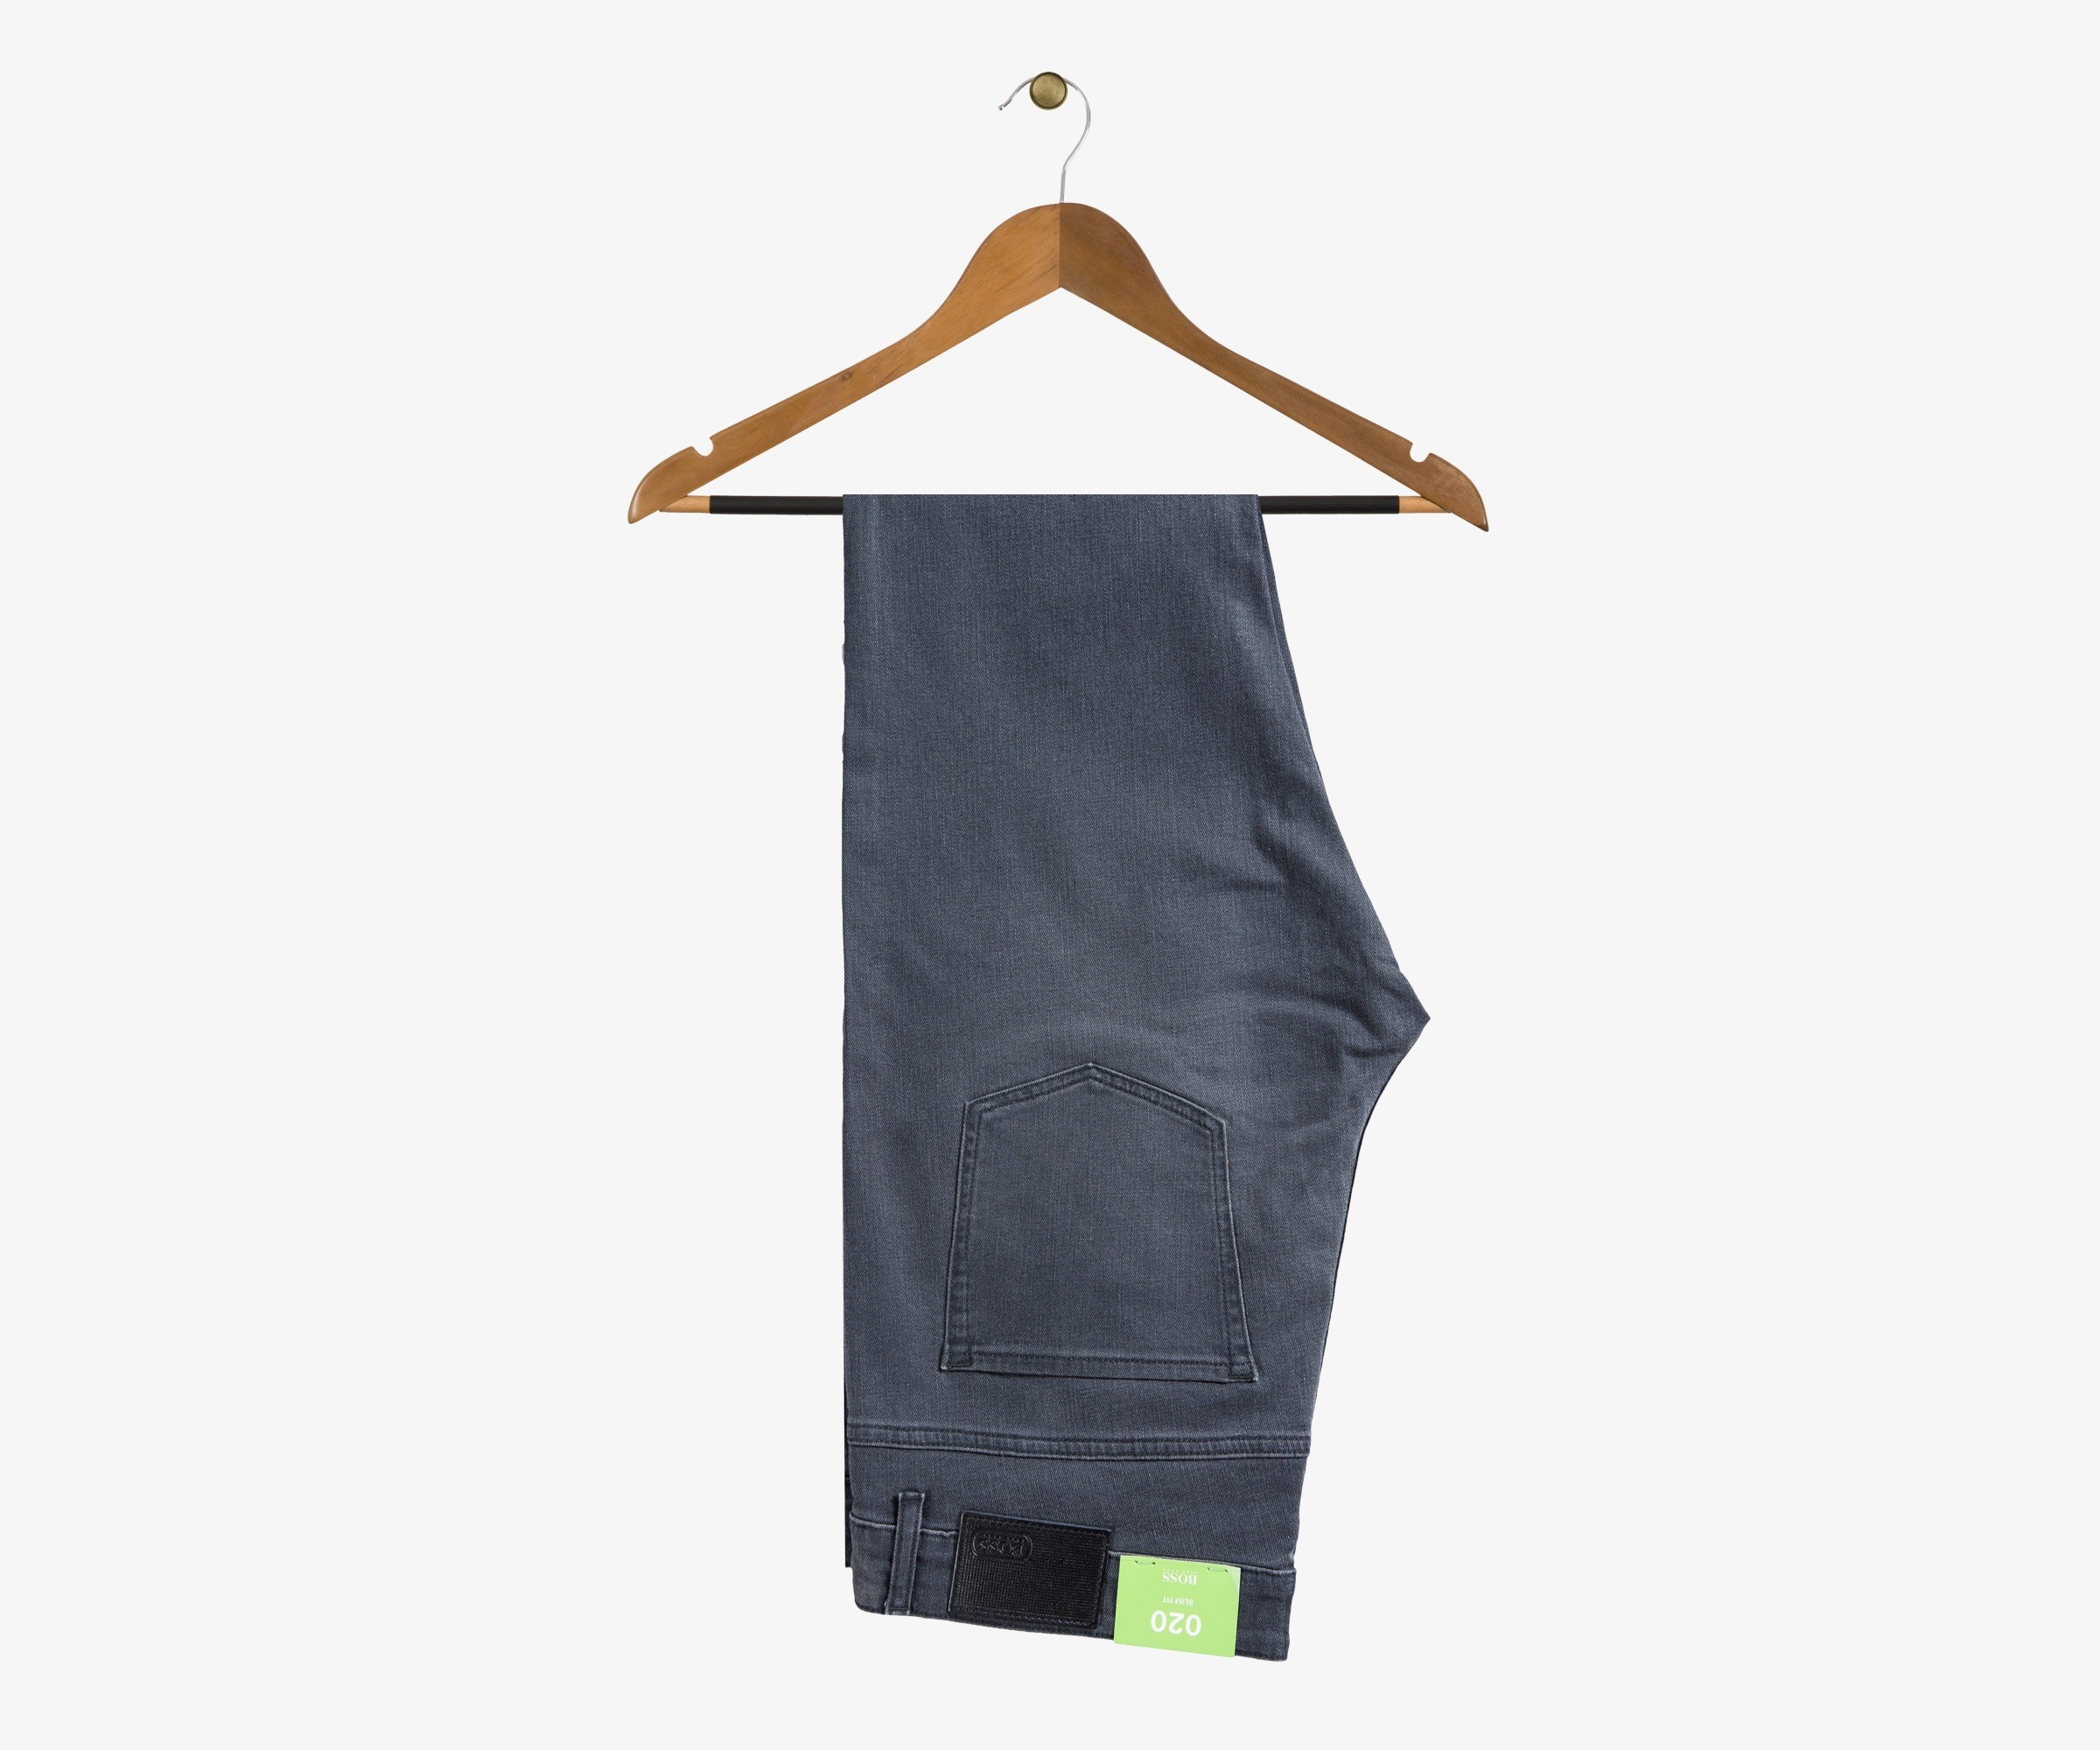 Hugo Boss Green 'C-Delaware' Slim Fit Dark Grey Wash Jean